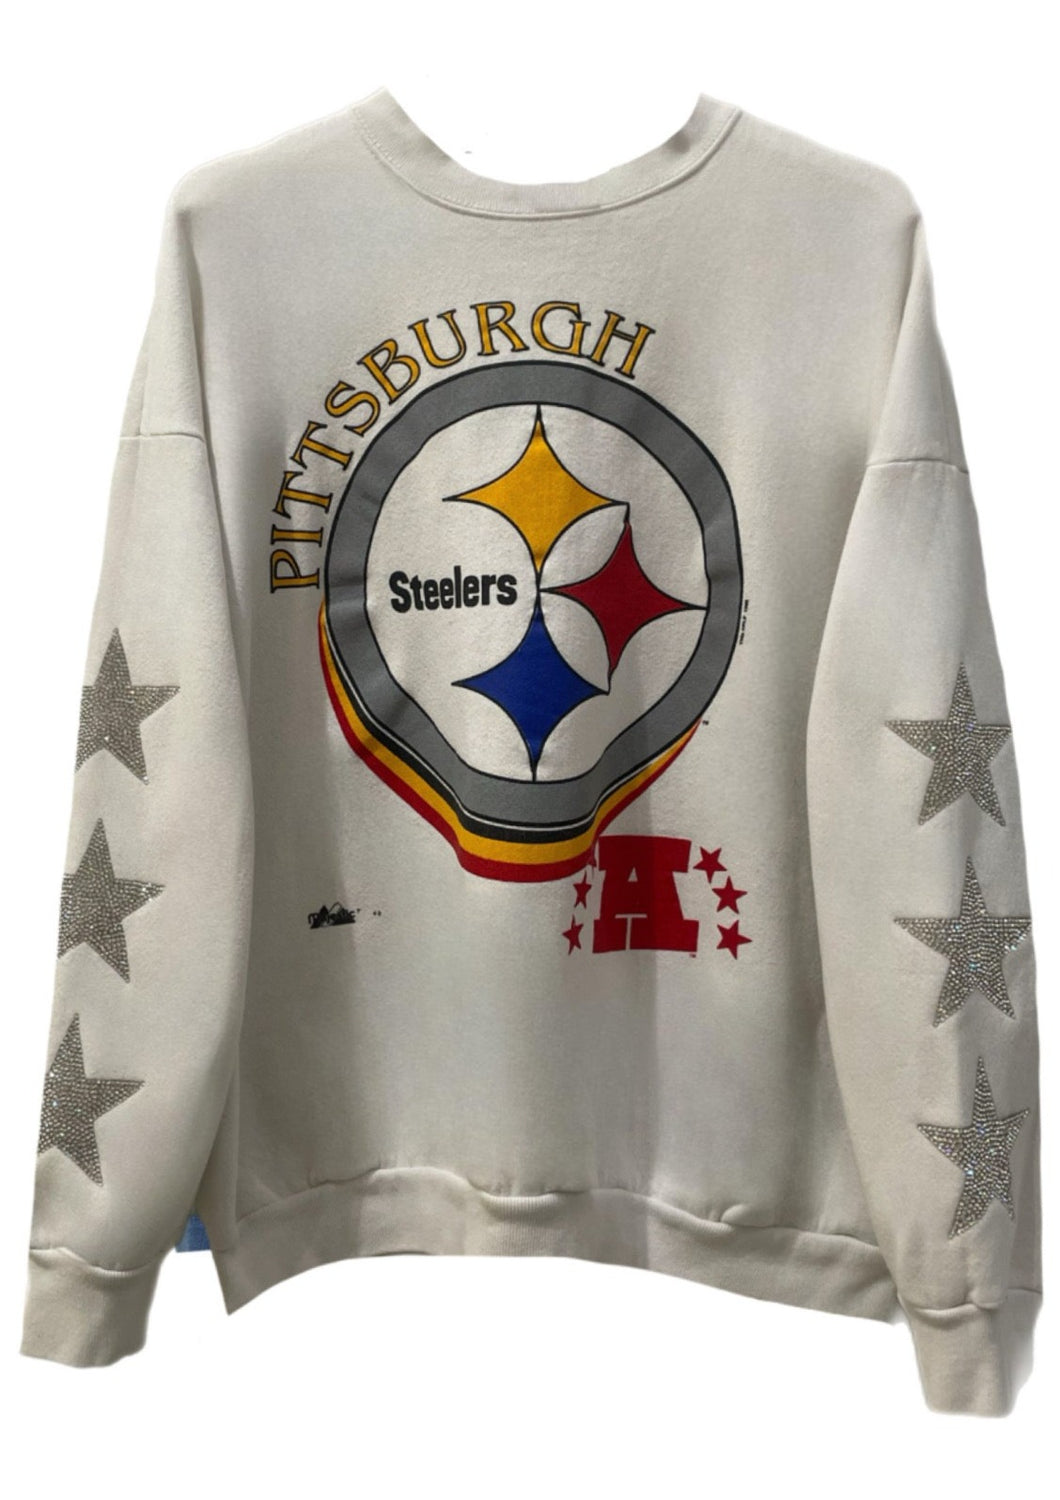 Pittsburgh Steelers, Football One of a KIND Vintage Sweatshirt with Three Crystal Star Design